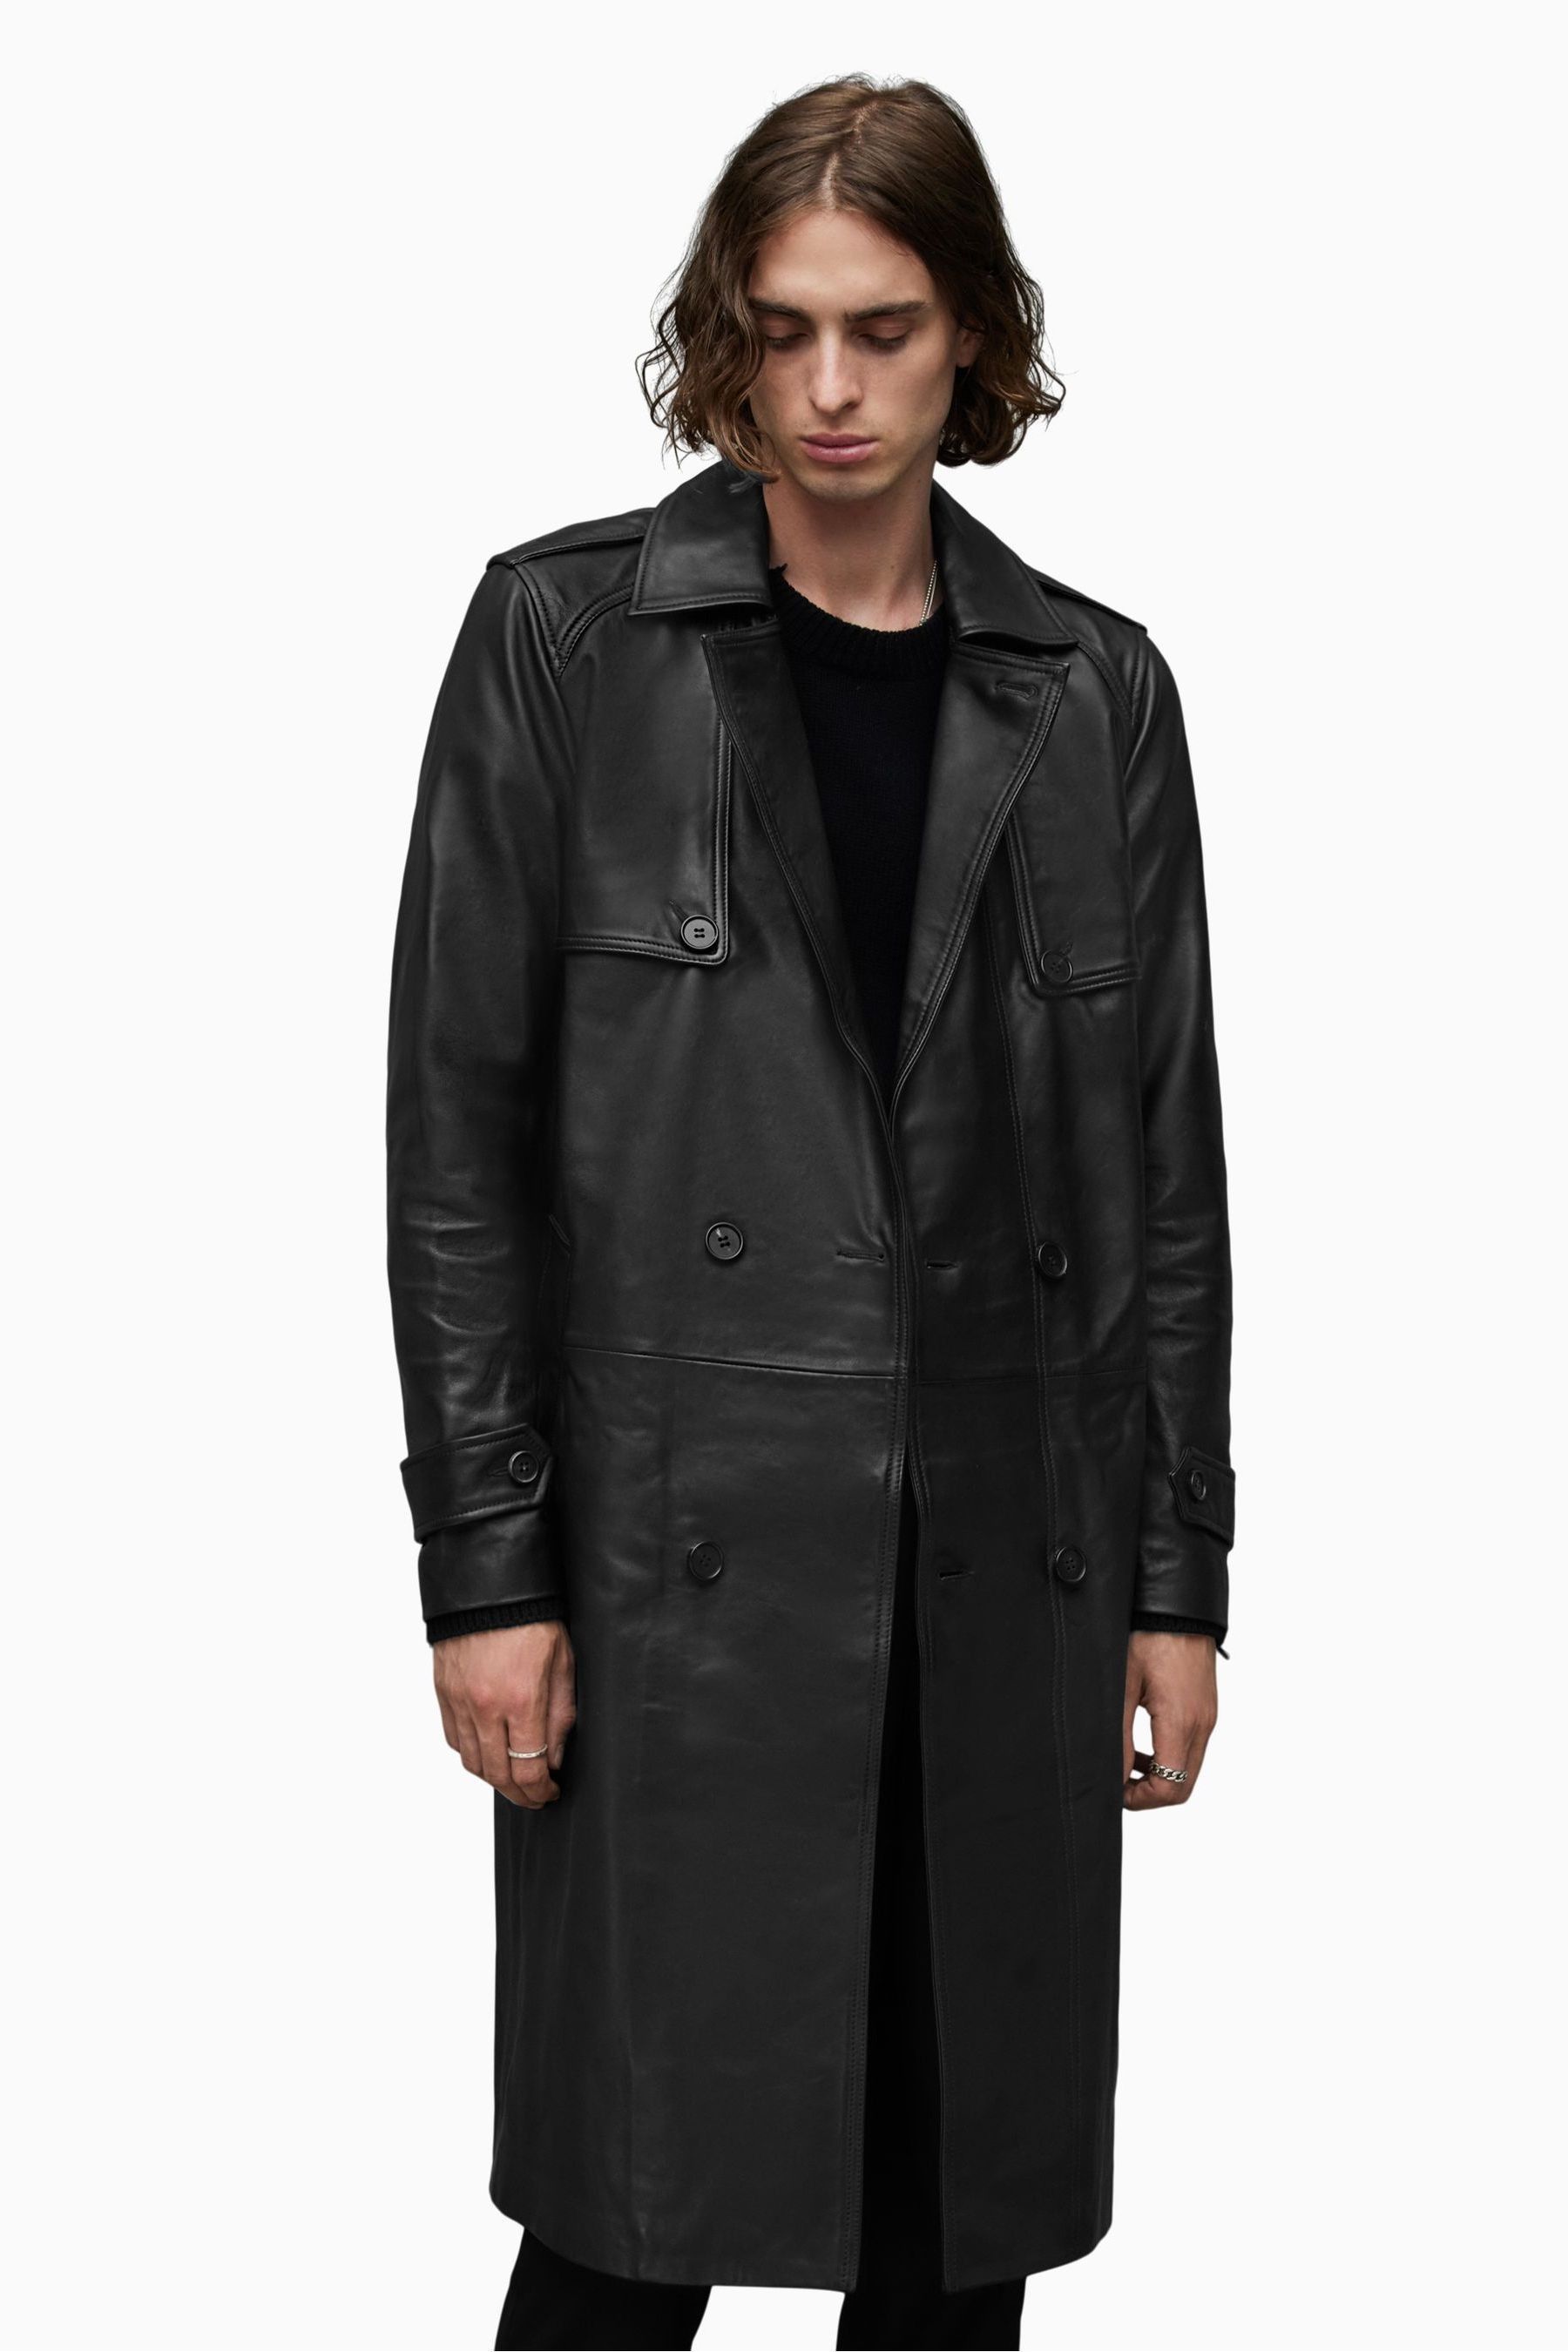 Buy AllSaints Oken Trench Black Coat from the Next UK online shop